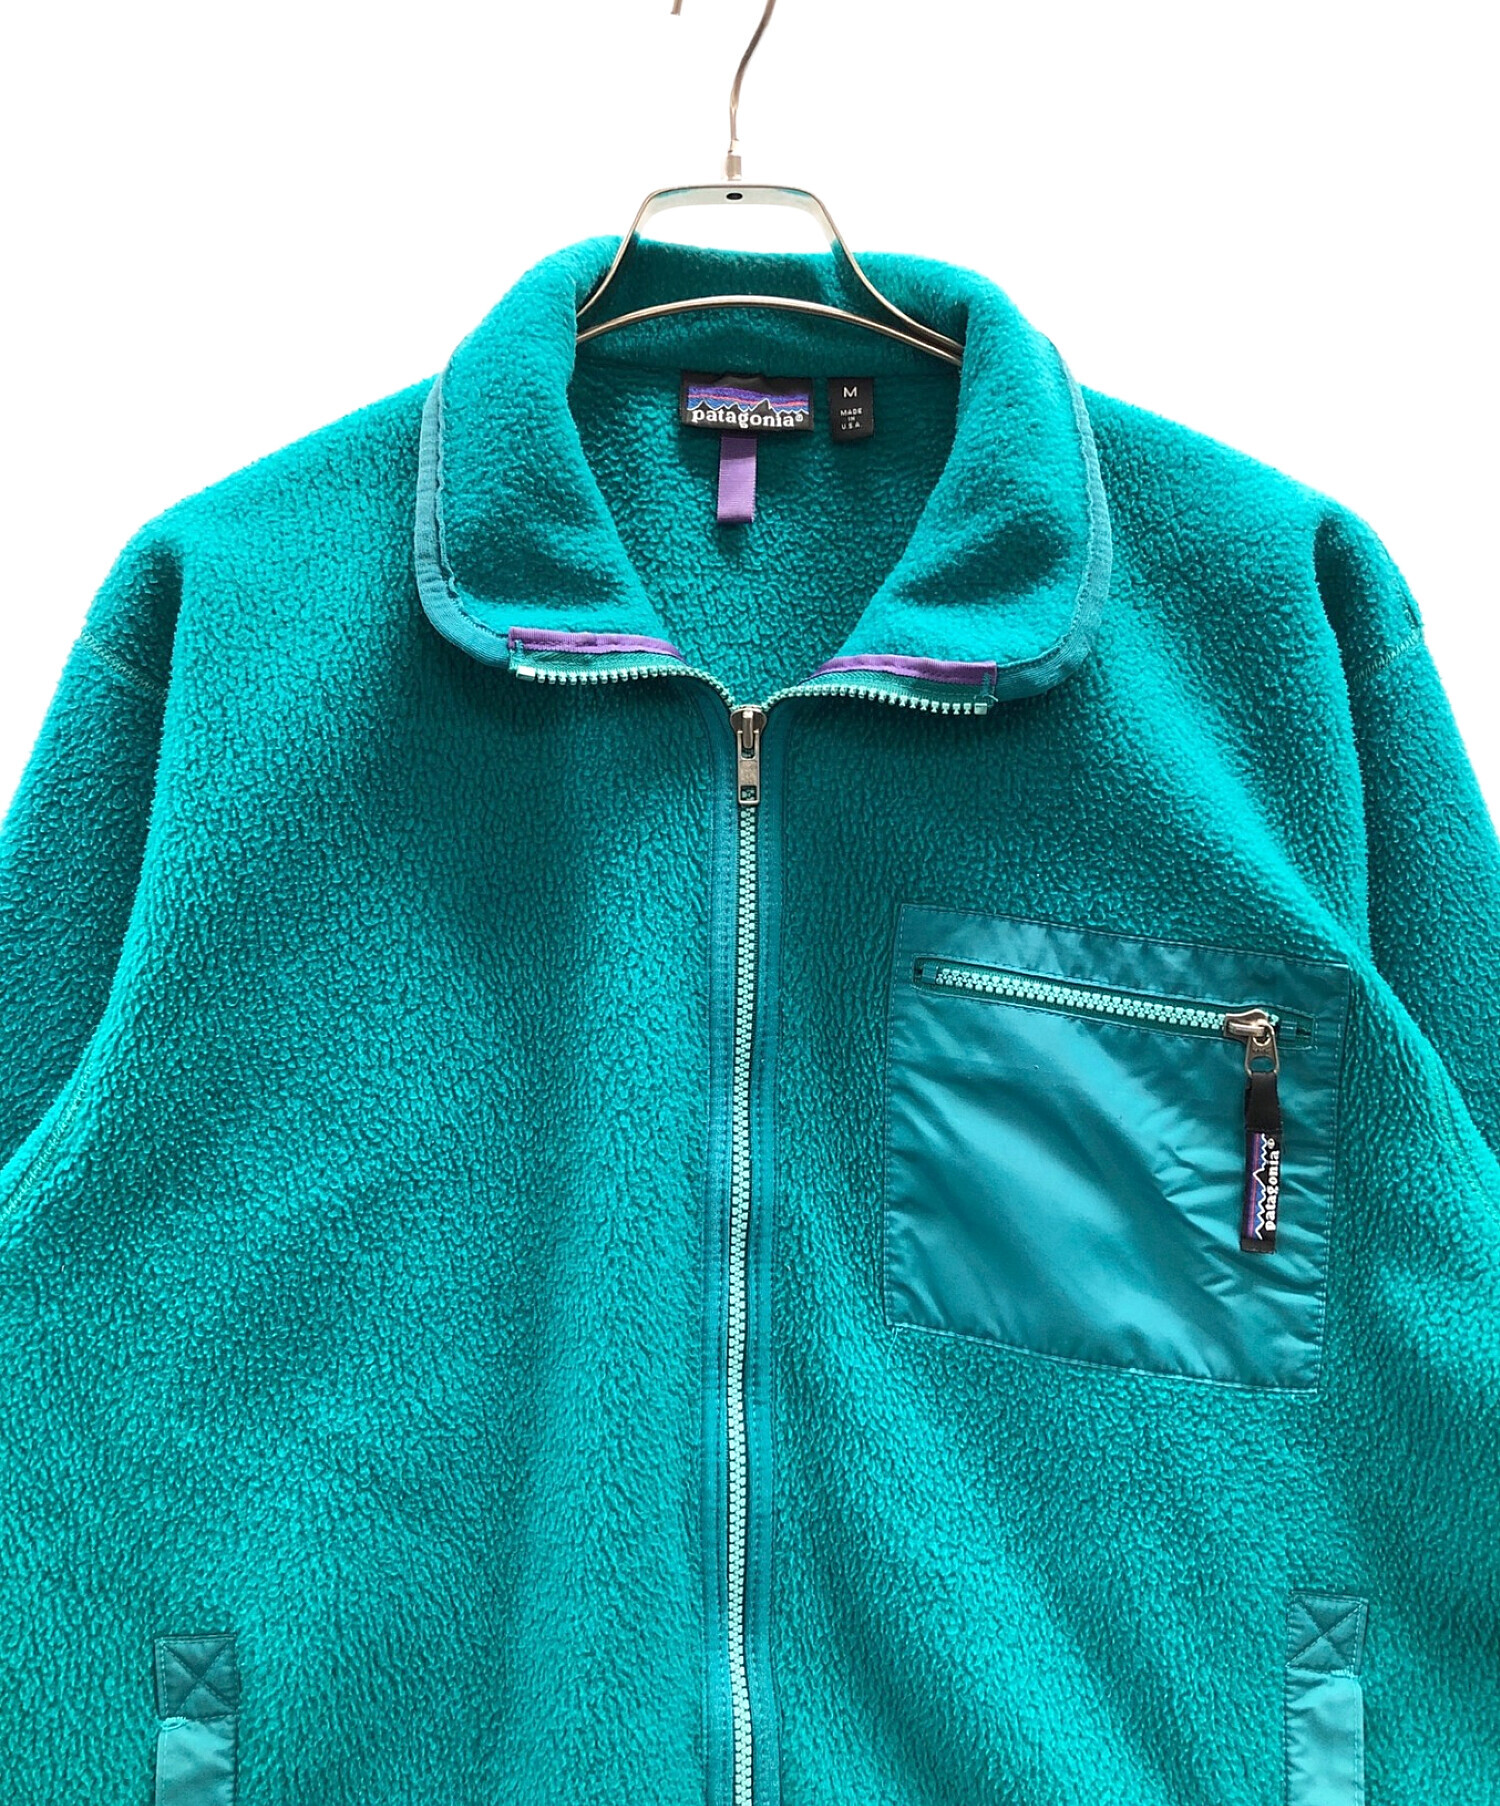 Patagonia (パタゴニア) フリースジャケット グリーン サイズ:M